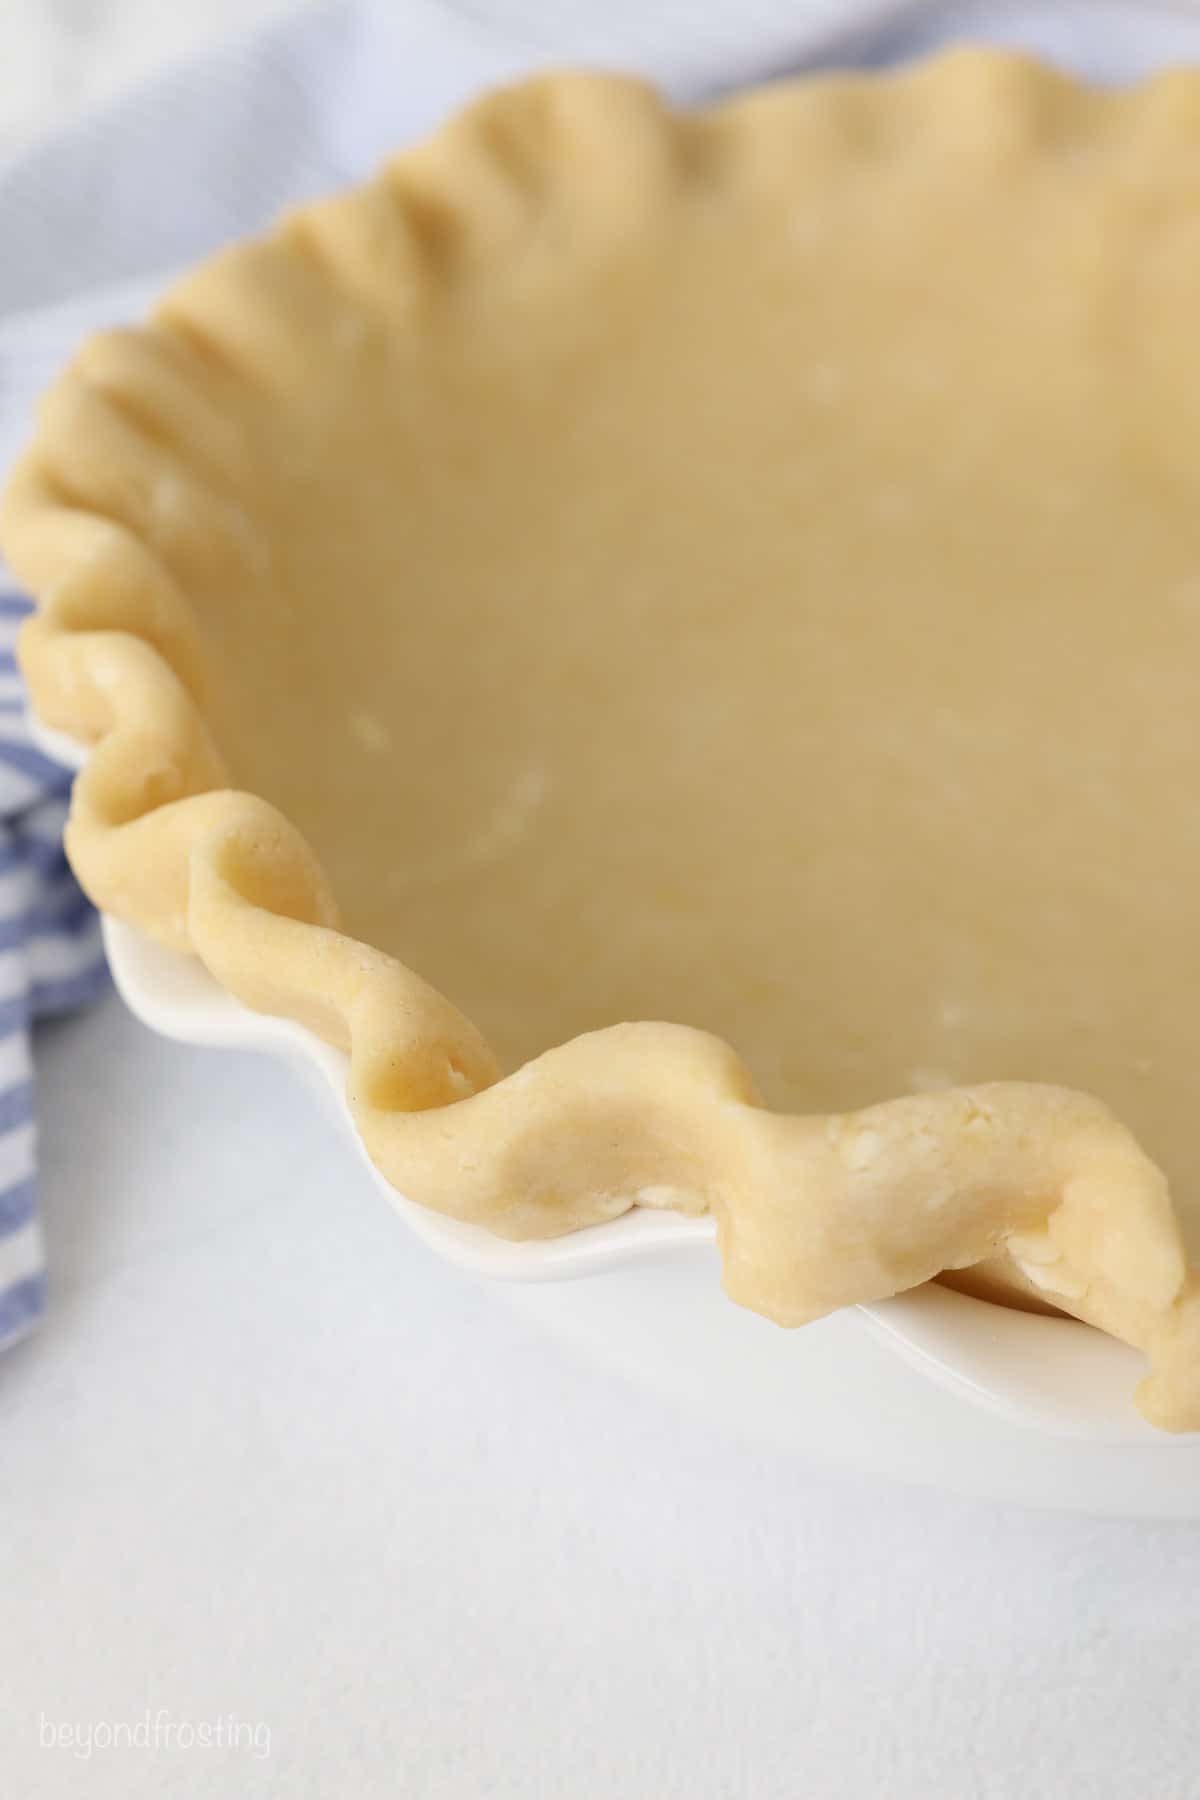 Unbaked pie crust in a pie plate.